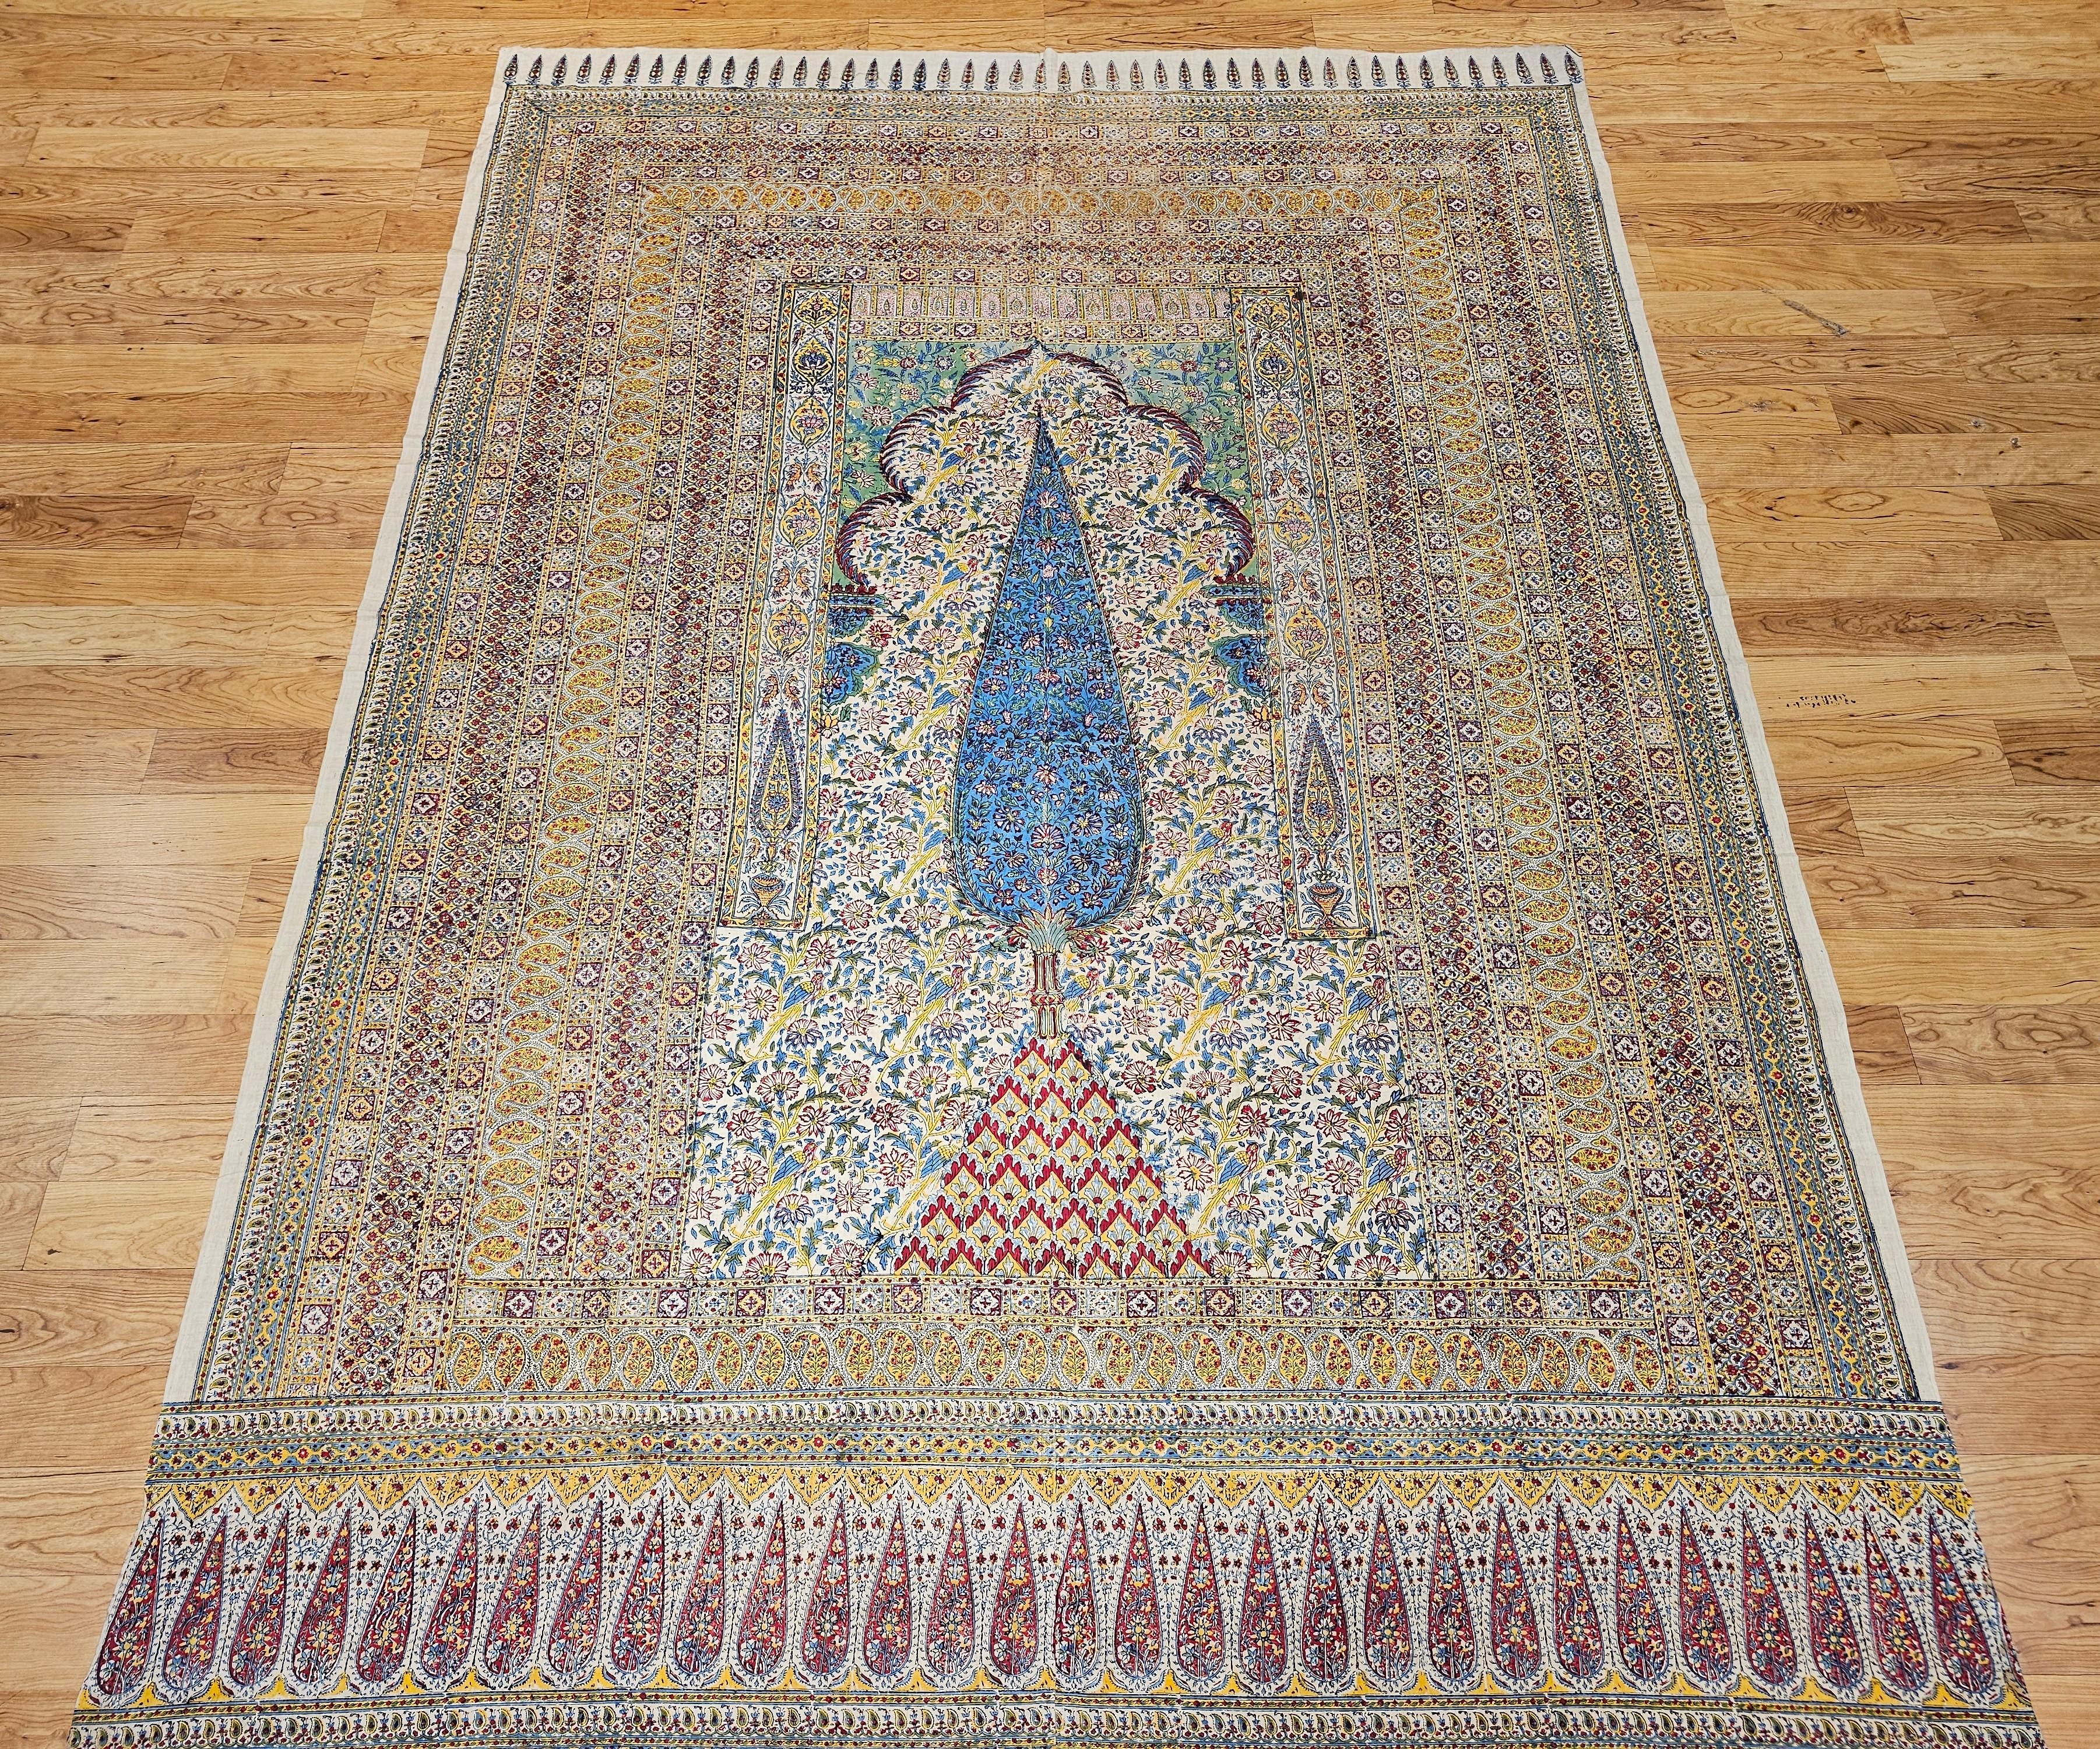 Vintage Persian Block Print (Kalamkari) Textile in Ivory, Yellow, Green, Blue For Sale 12